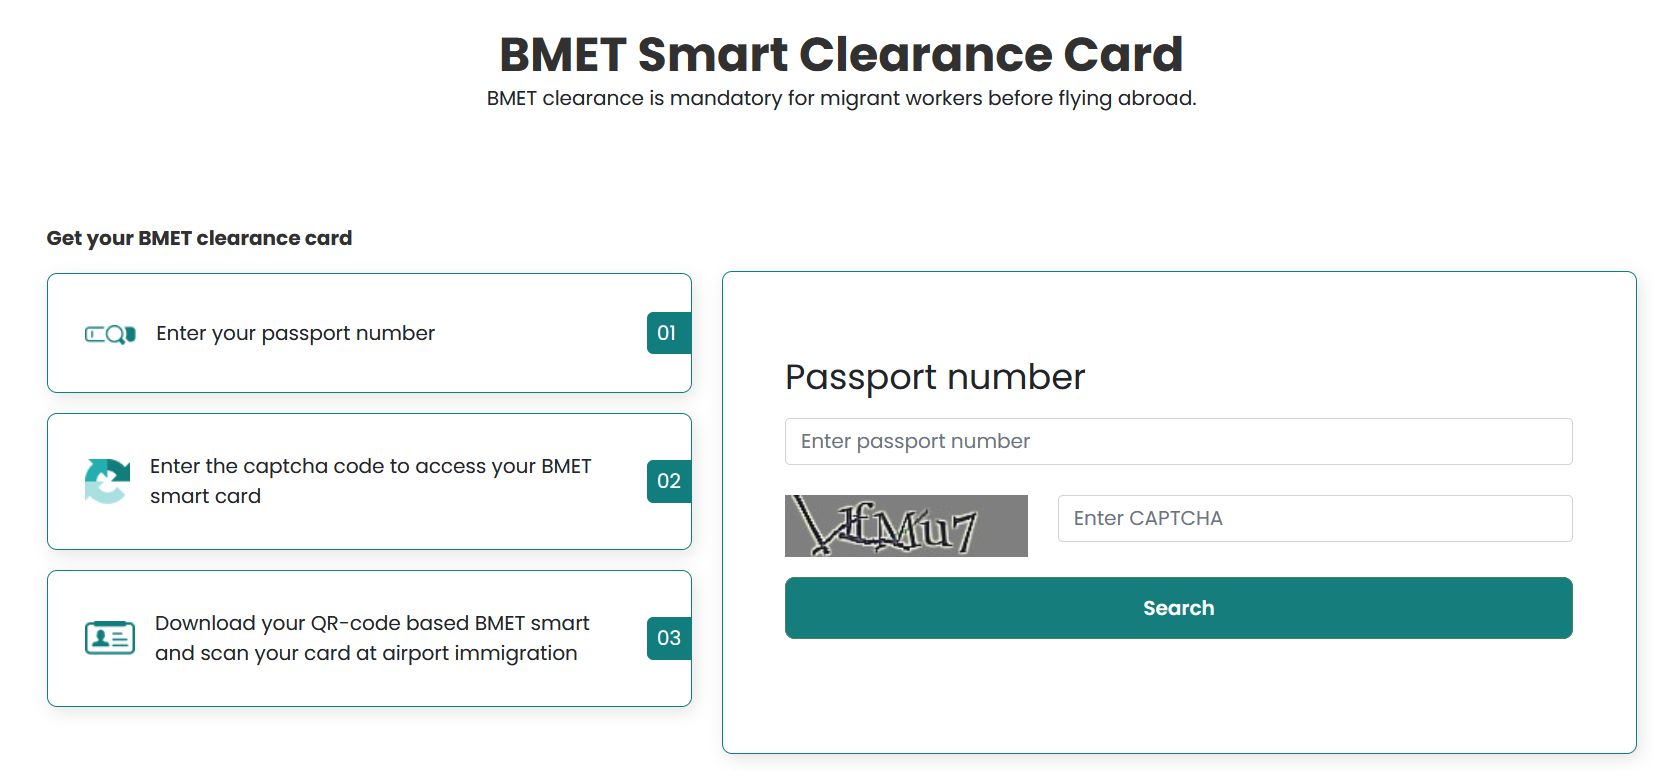 BMET Smart Clearance Card